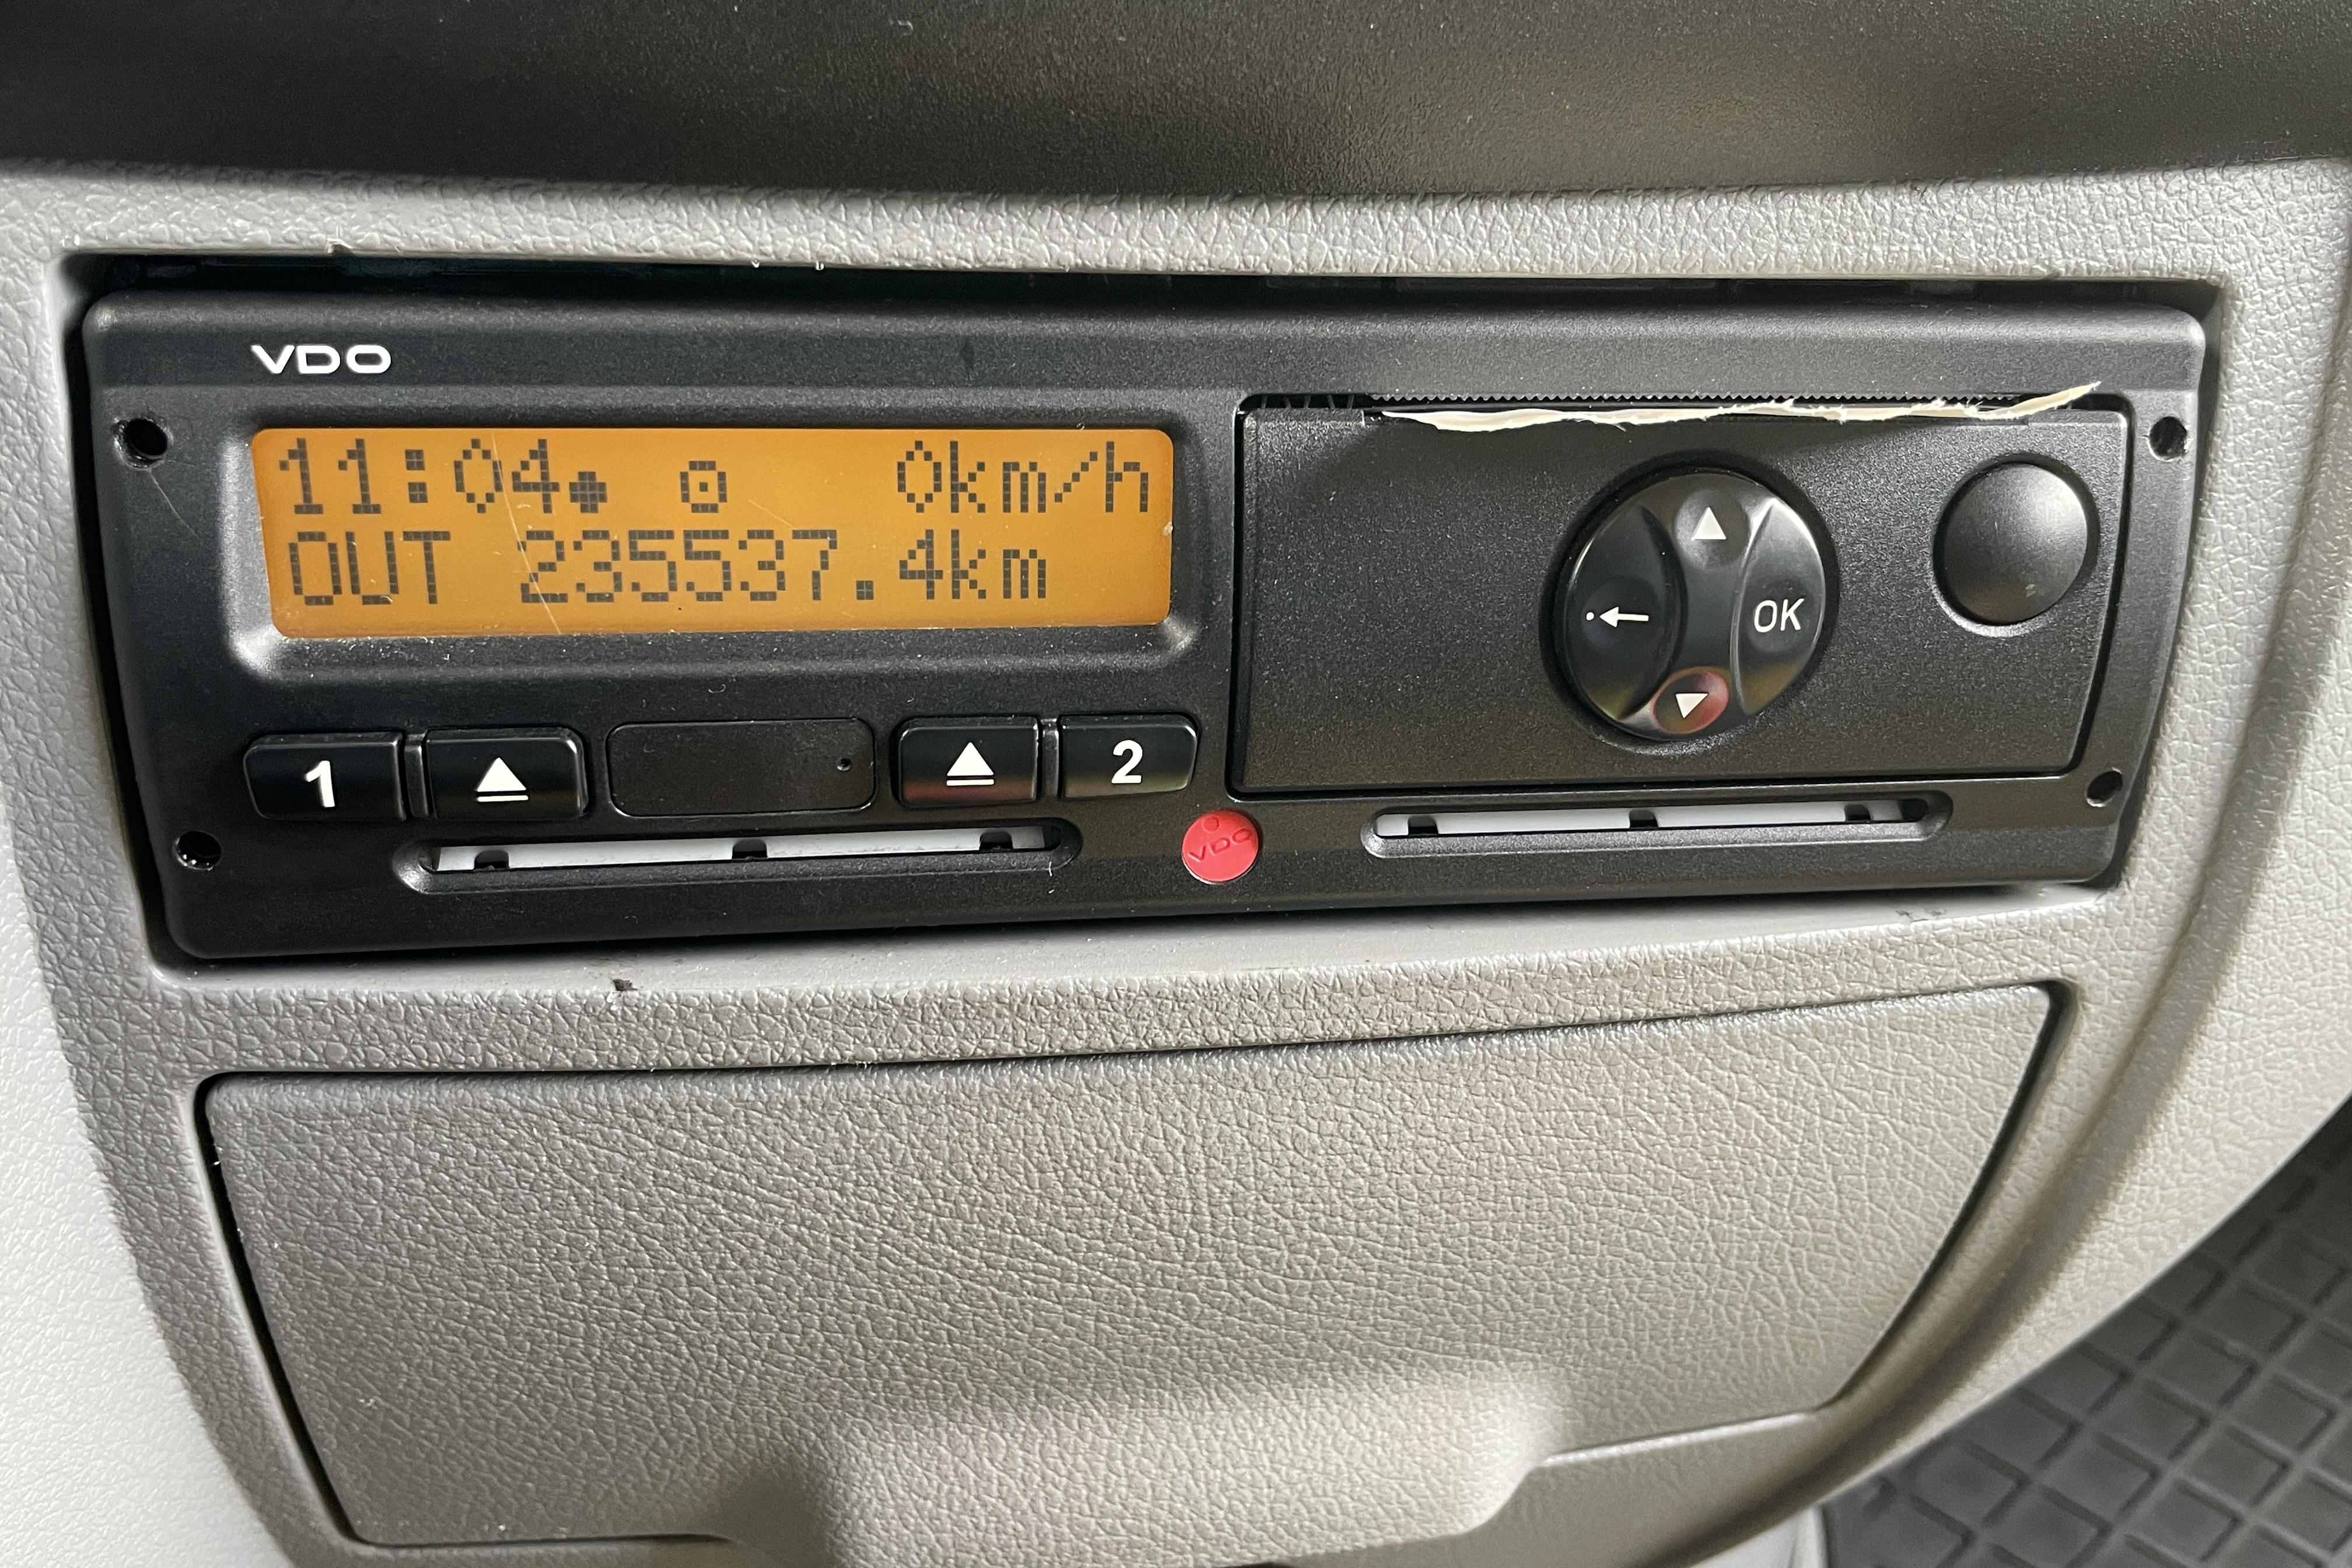 Mercedes Sprinter 516 CDI (163hk) - 235 537 km - Manual - yellow - 2014